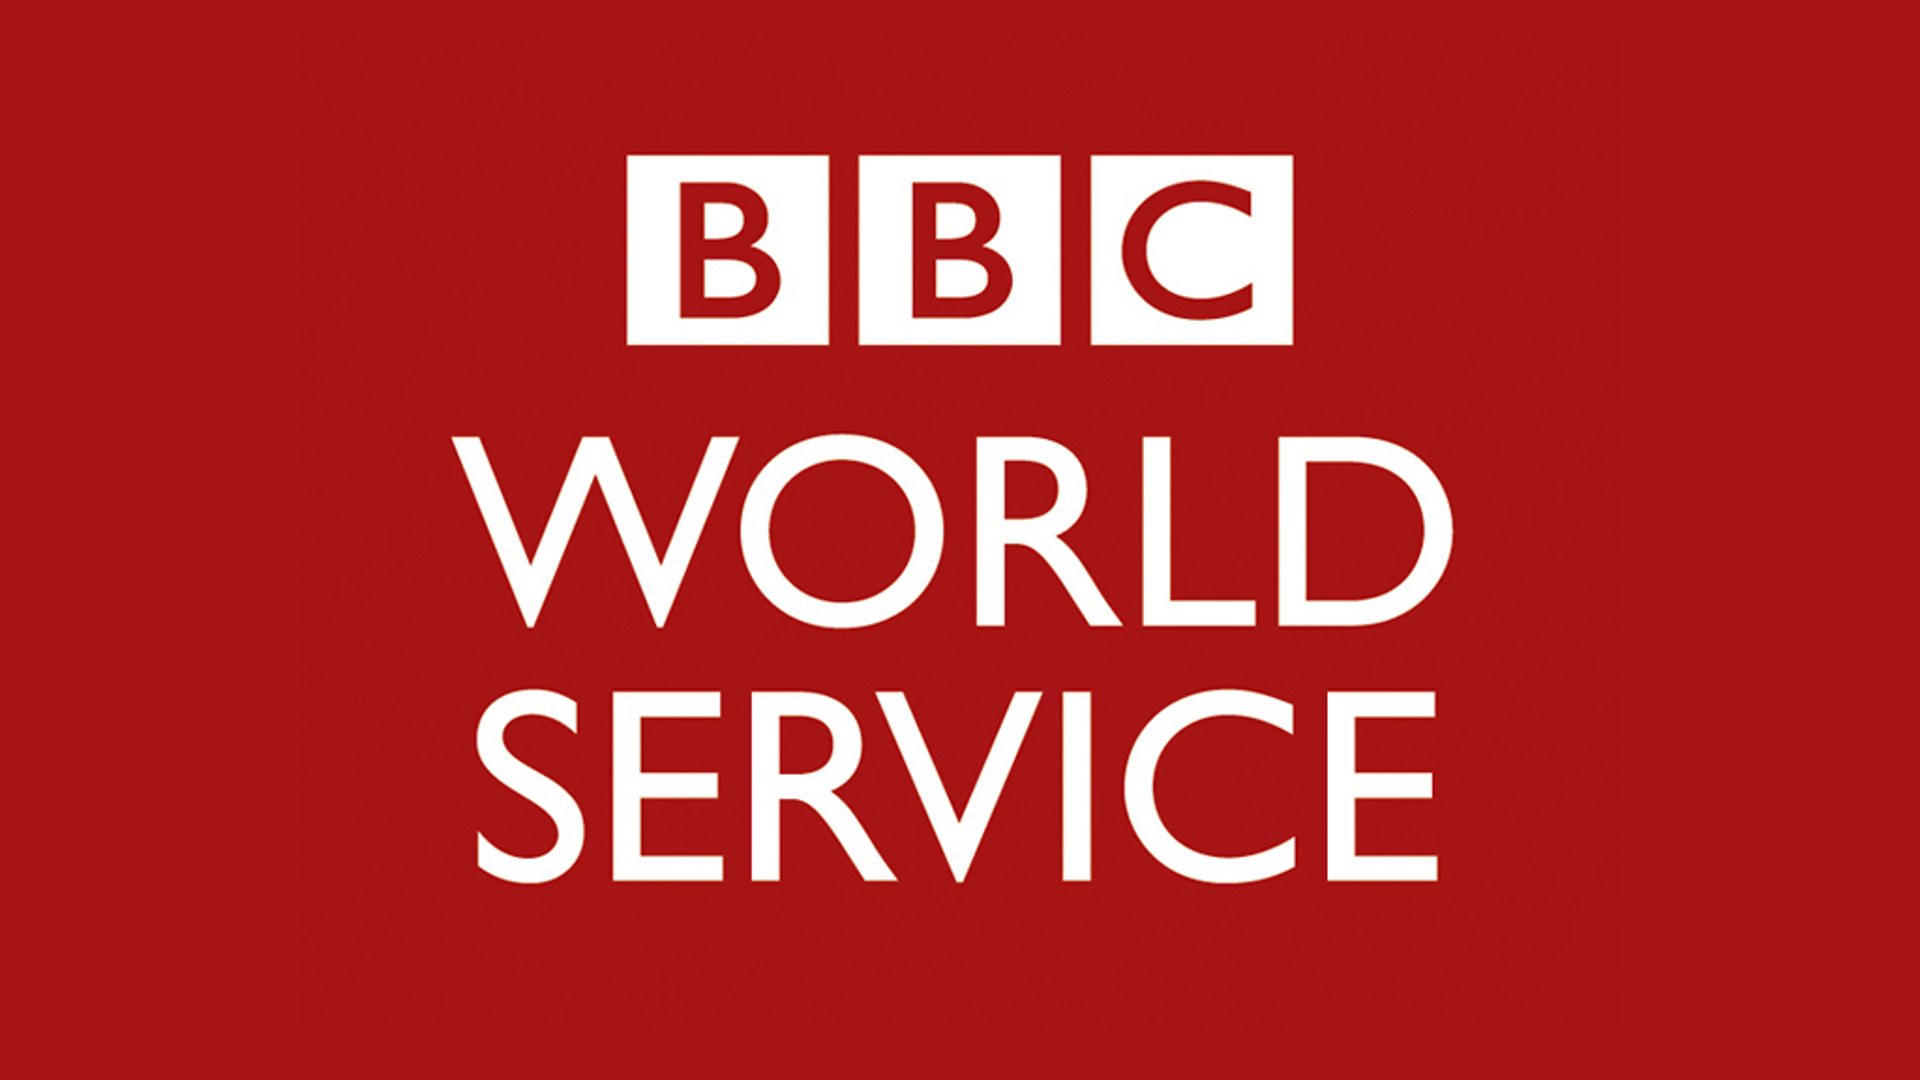 Bbc world service webeye